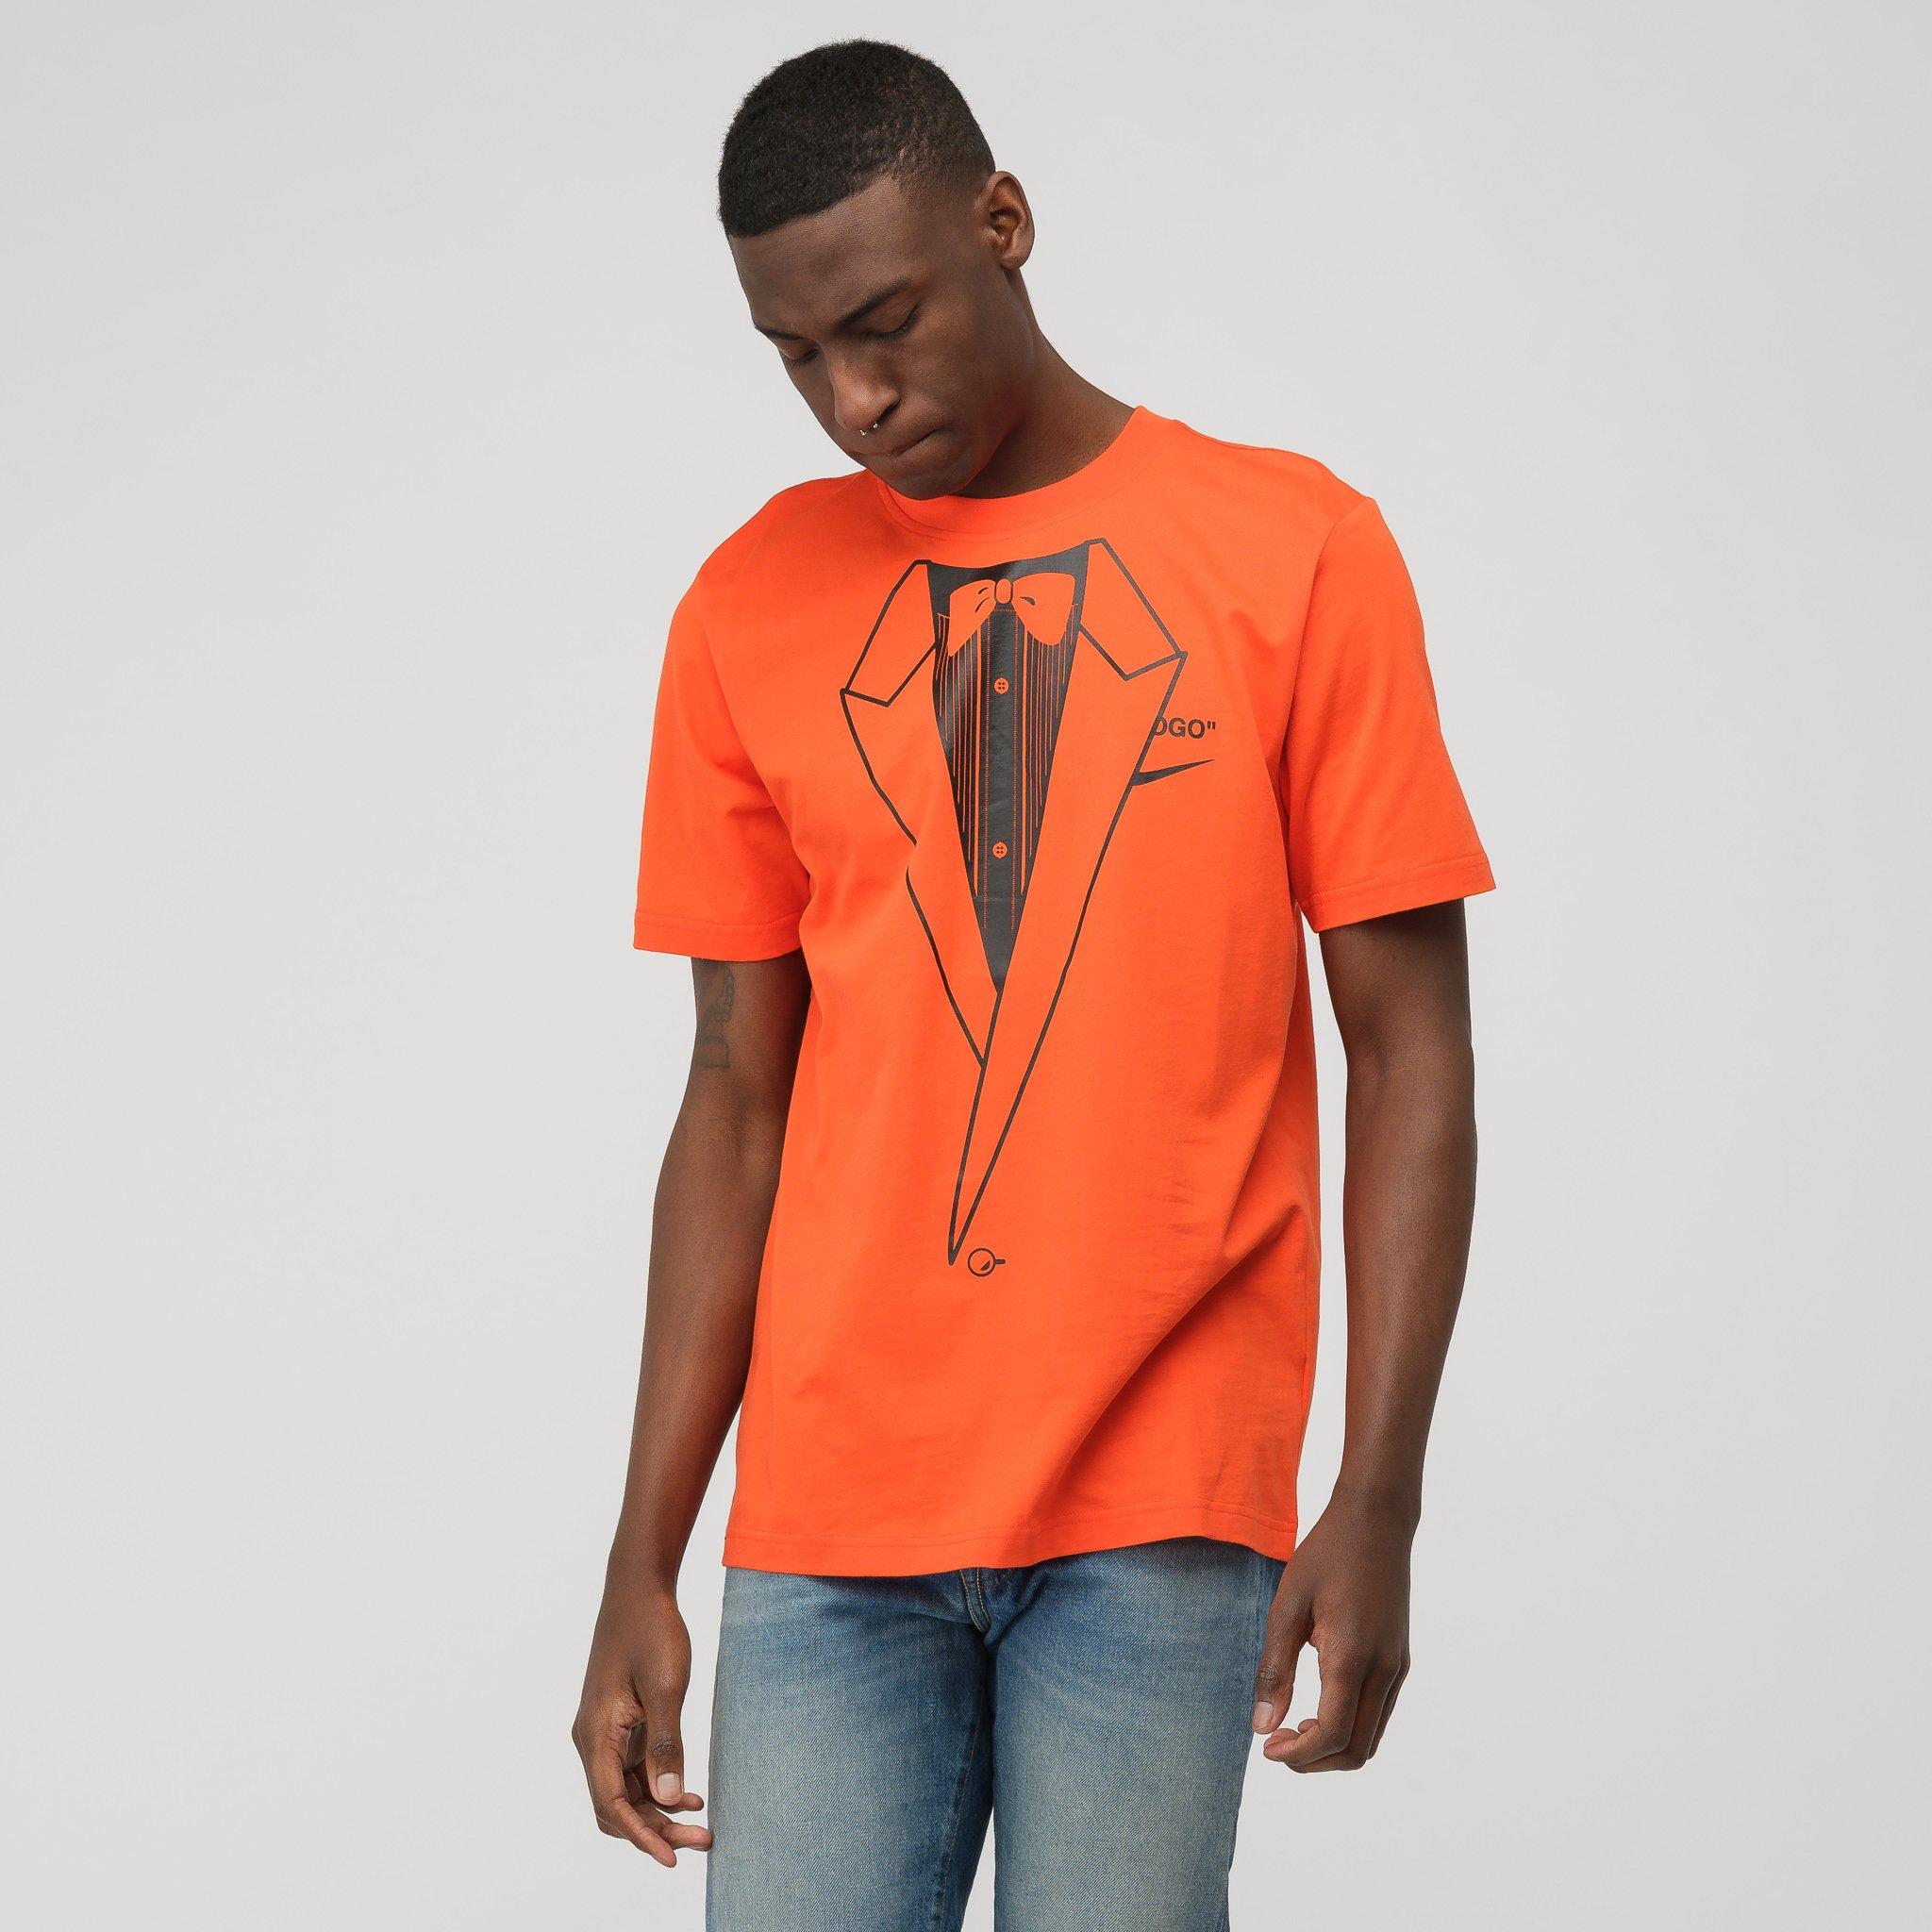 Nike Cotton Off-white Nrg A6 T-shirt in Orange/Black (Orange) for Men | Lyst